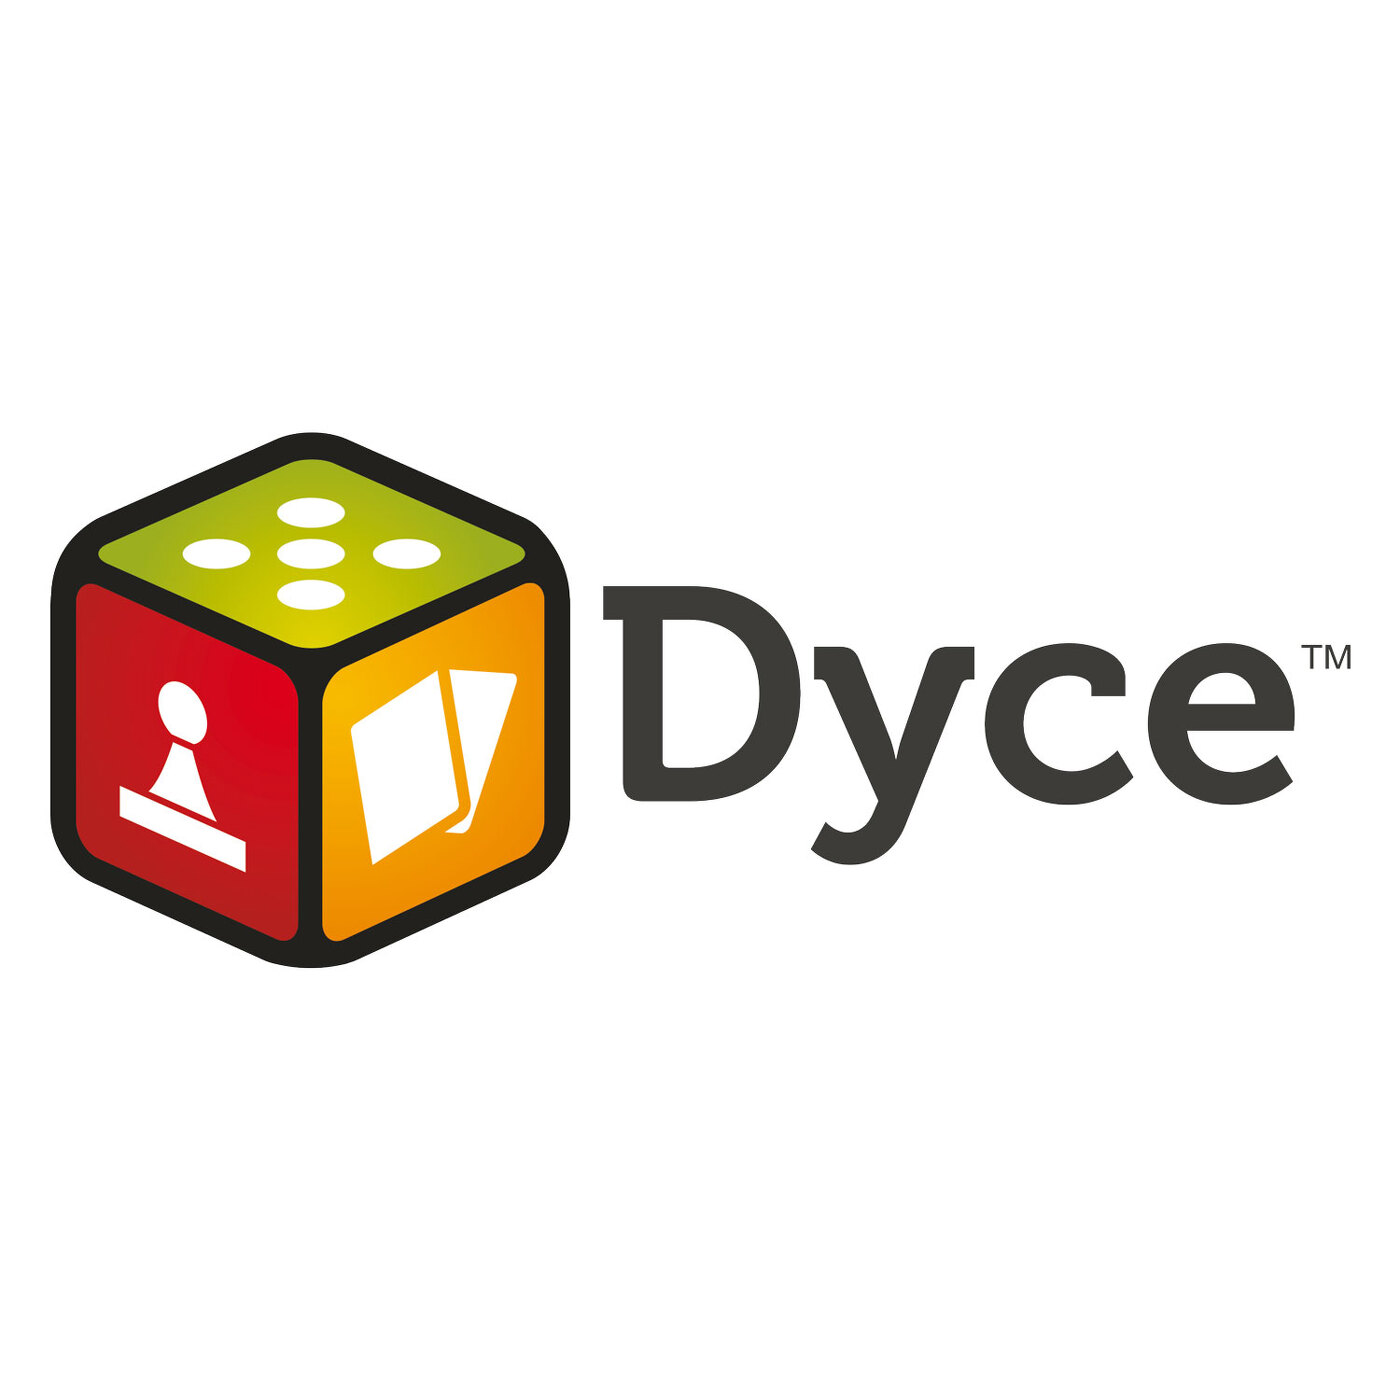 Dyce Games